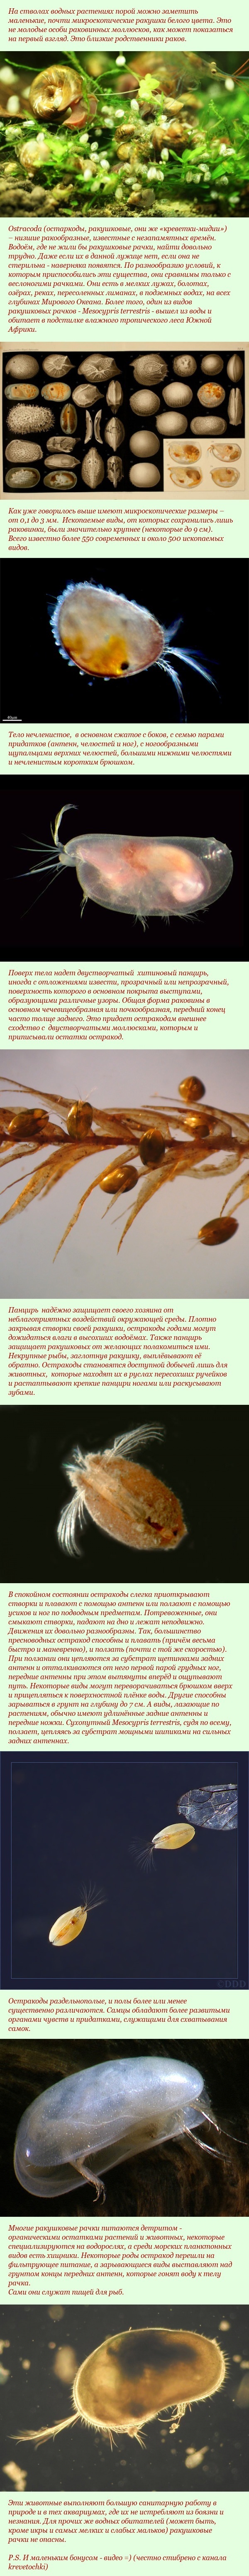 Shrimp Mussels - Longpost, Video, Biology, Hydrobiology, Crustaceans, Zoology, 